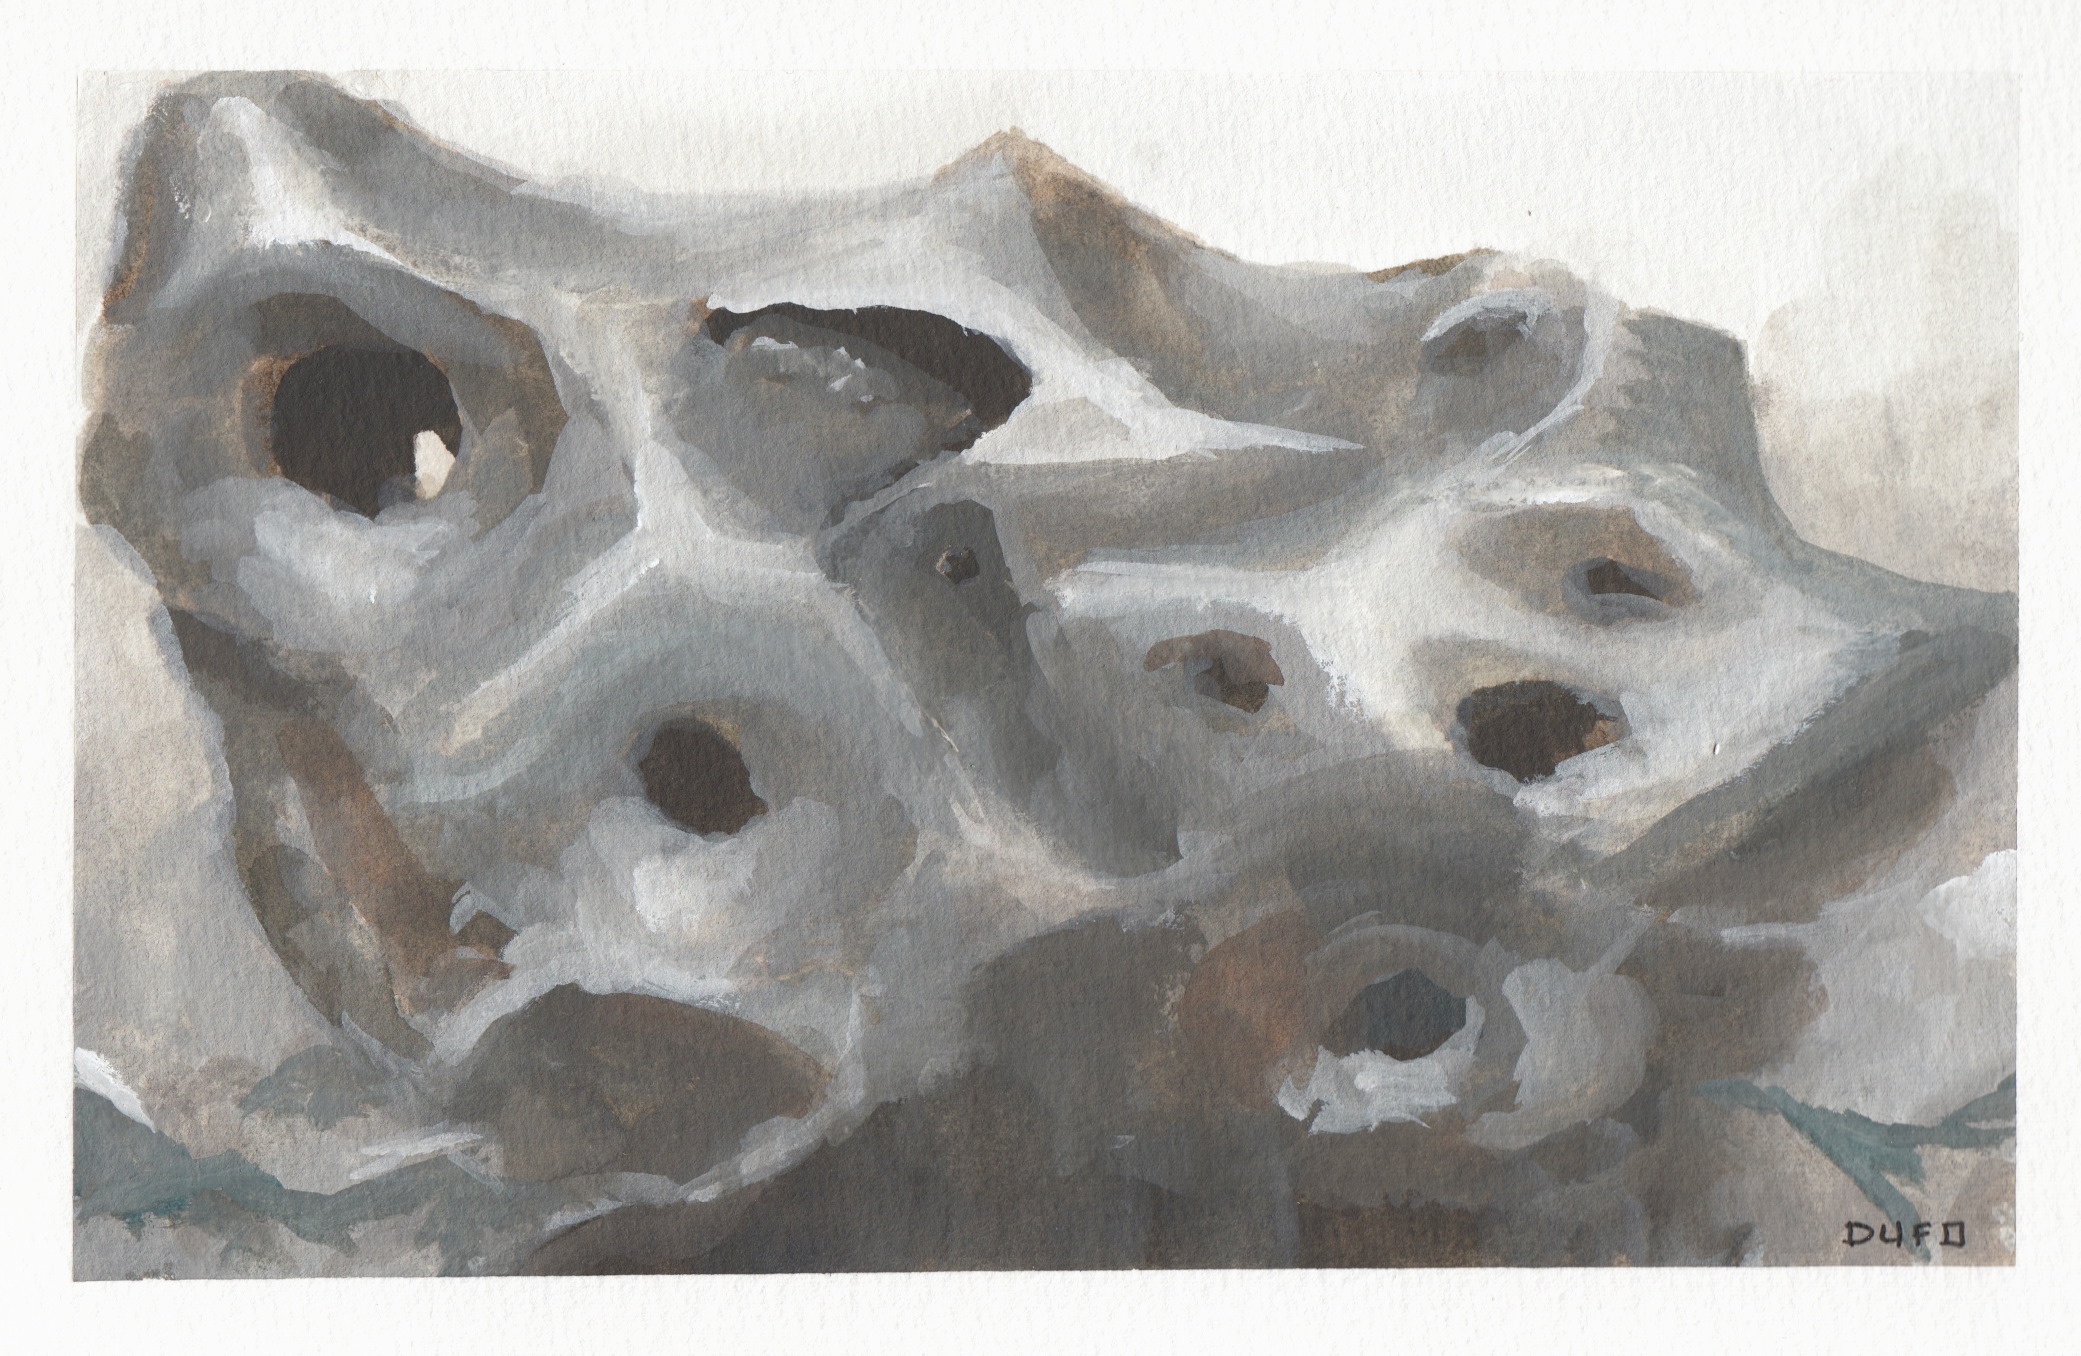 Exploration #10, Meteorite - DUFO's artwork